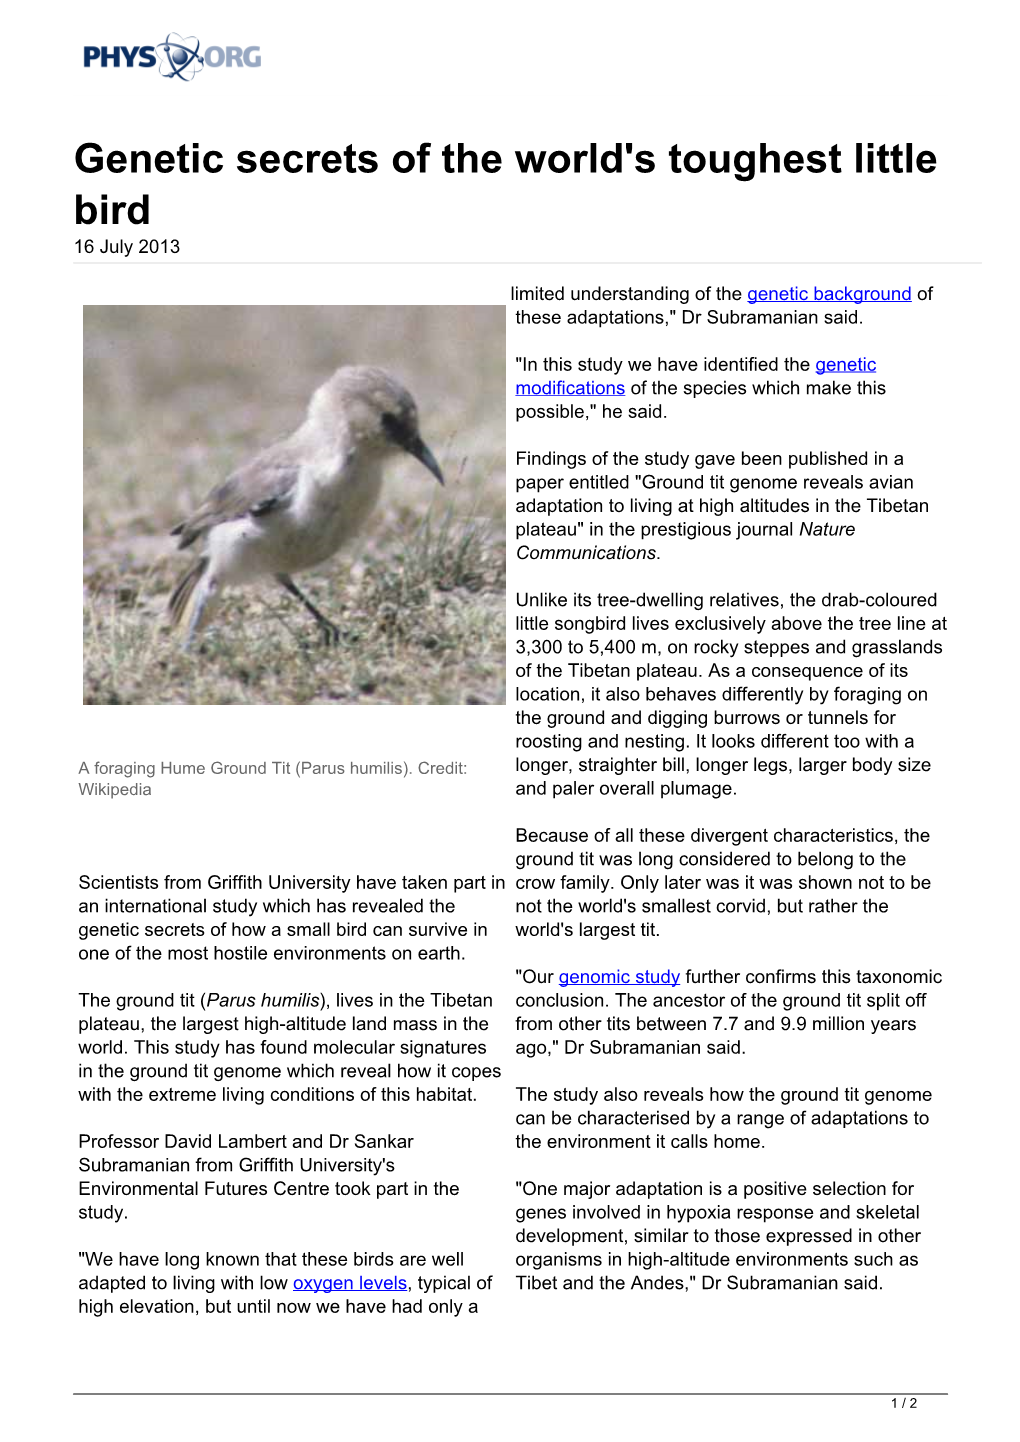 Genetic Secrets of the World's Toughest Little Bird 16 July 2013